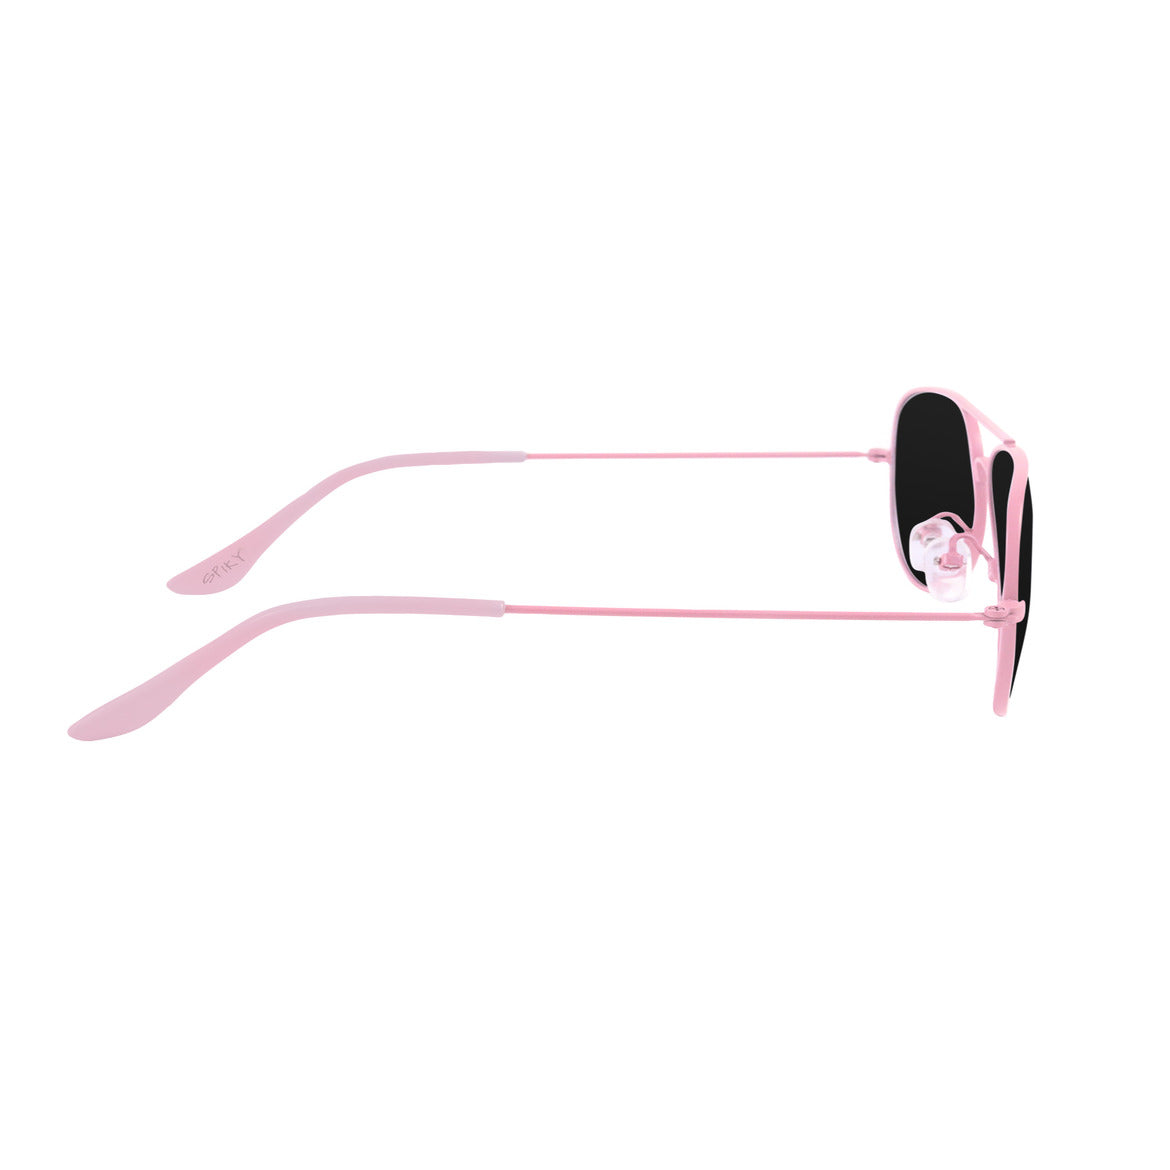 Spiky Aviator UV Protected Sunglass - Pink Grey